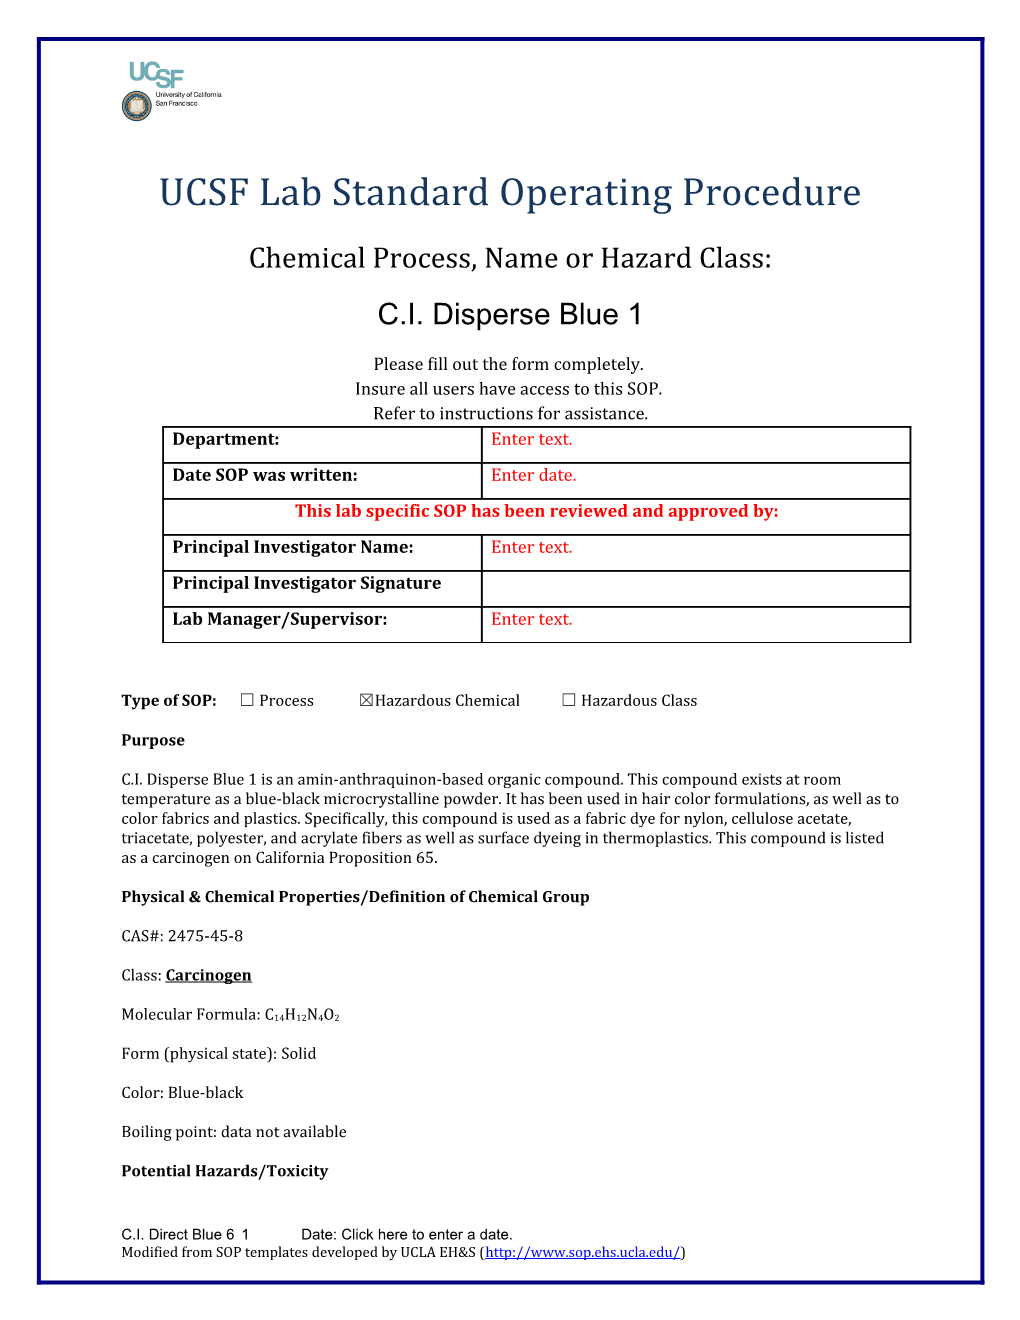 UCSF Lab Standard Operating Procedure s33